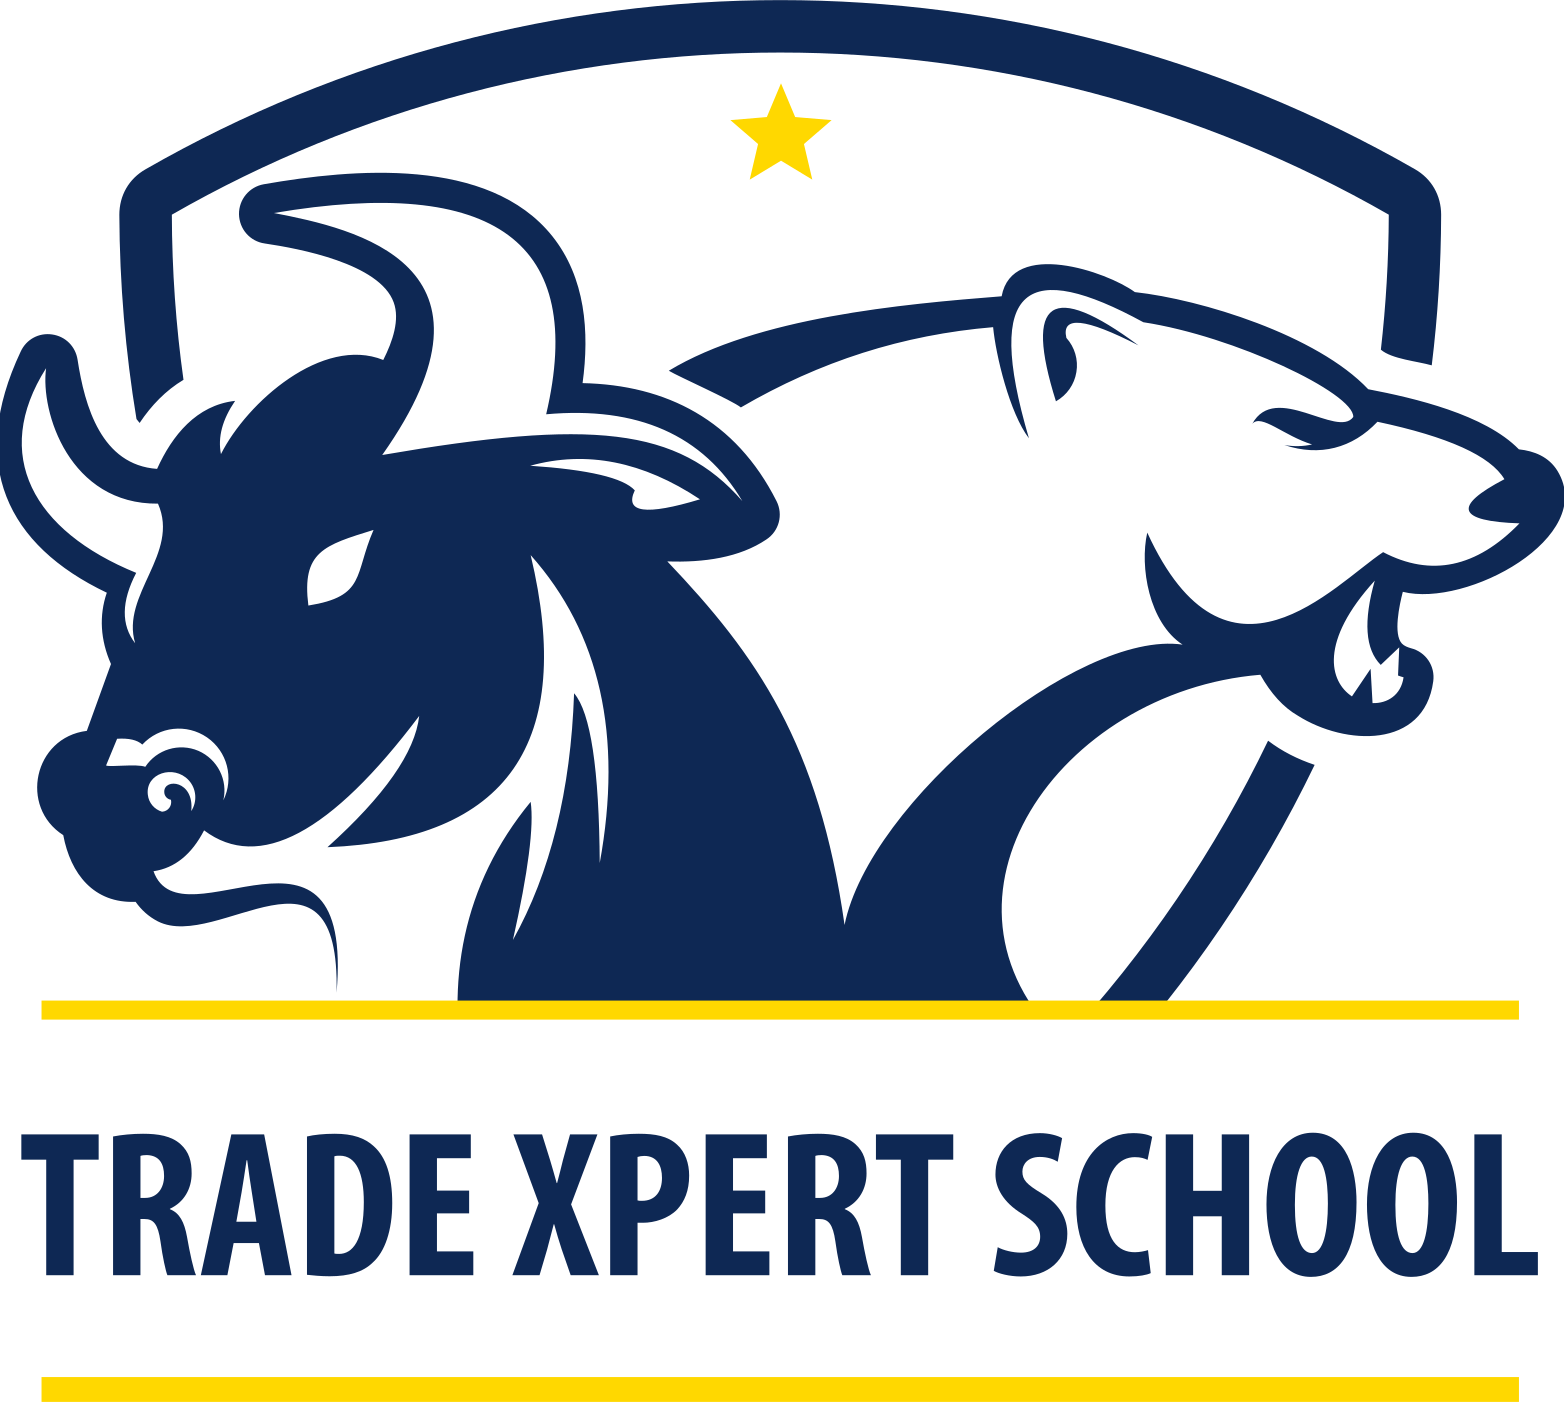 Trade Xpert School